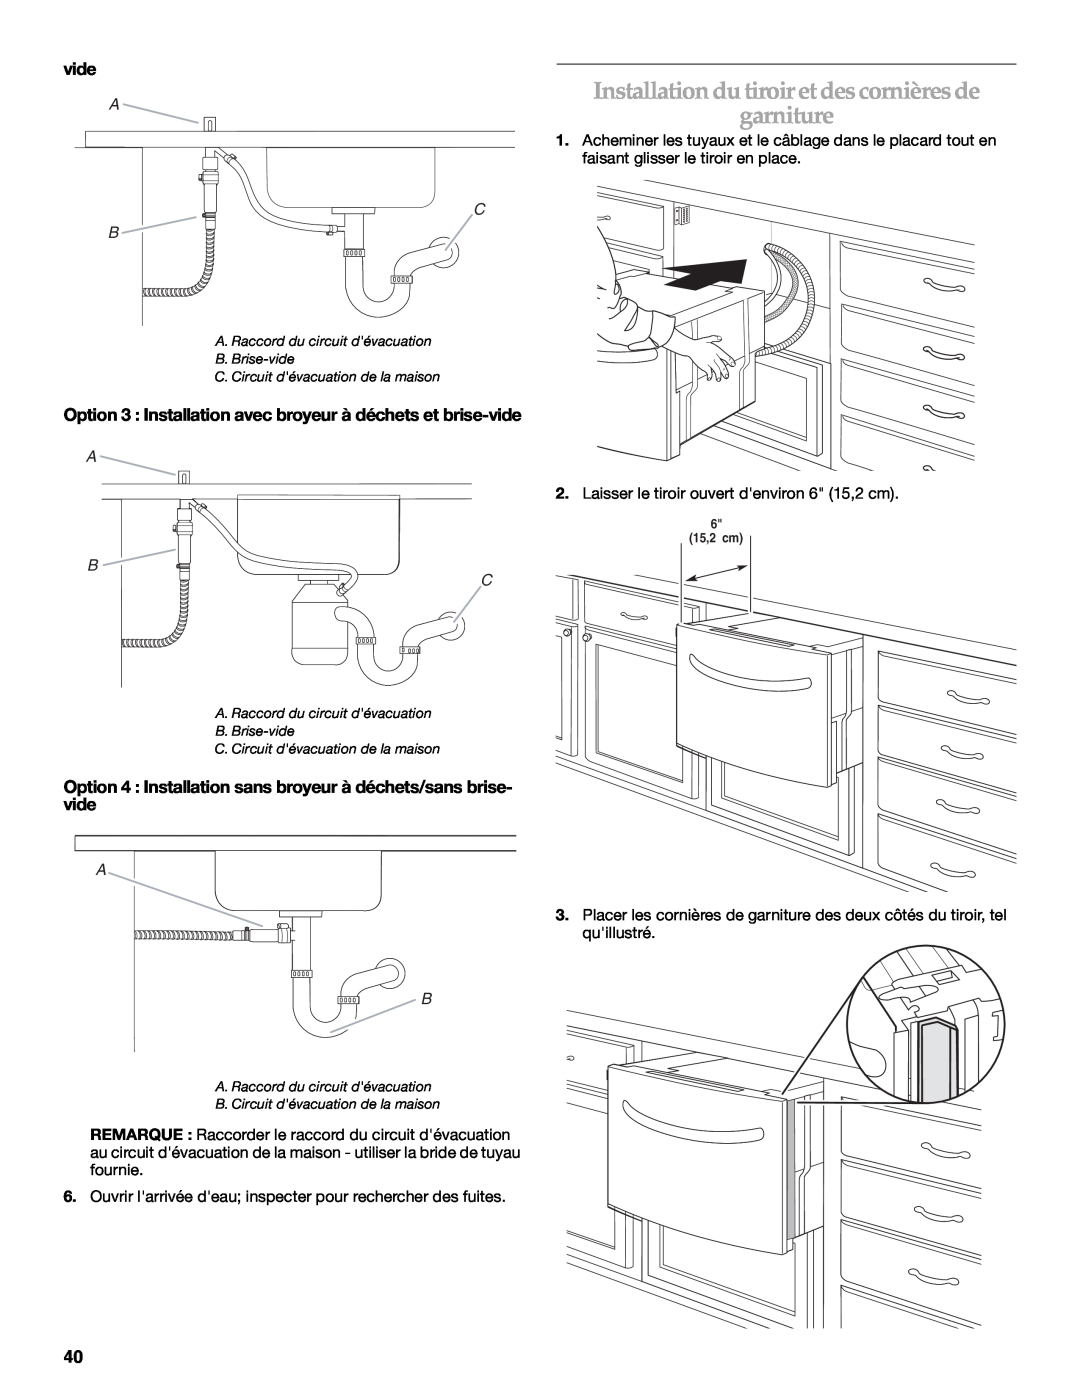 KitchenAid KUDD03STBL installation instructions Installation du tiroir et des cornières de garniture, vide, A B C 